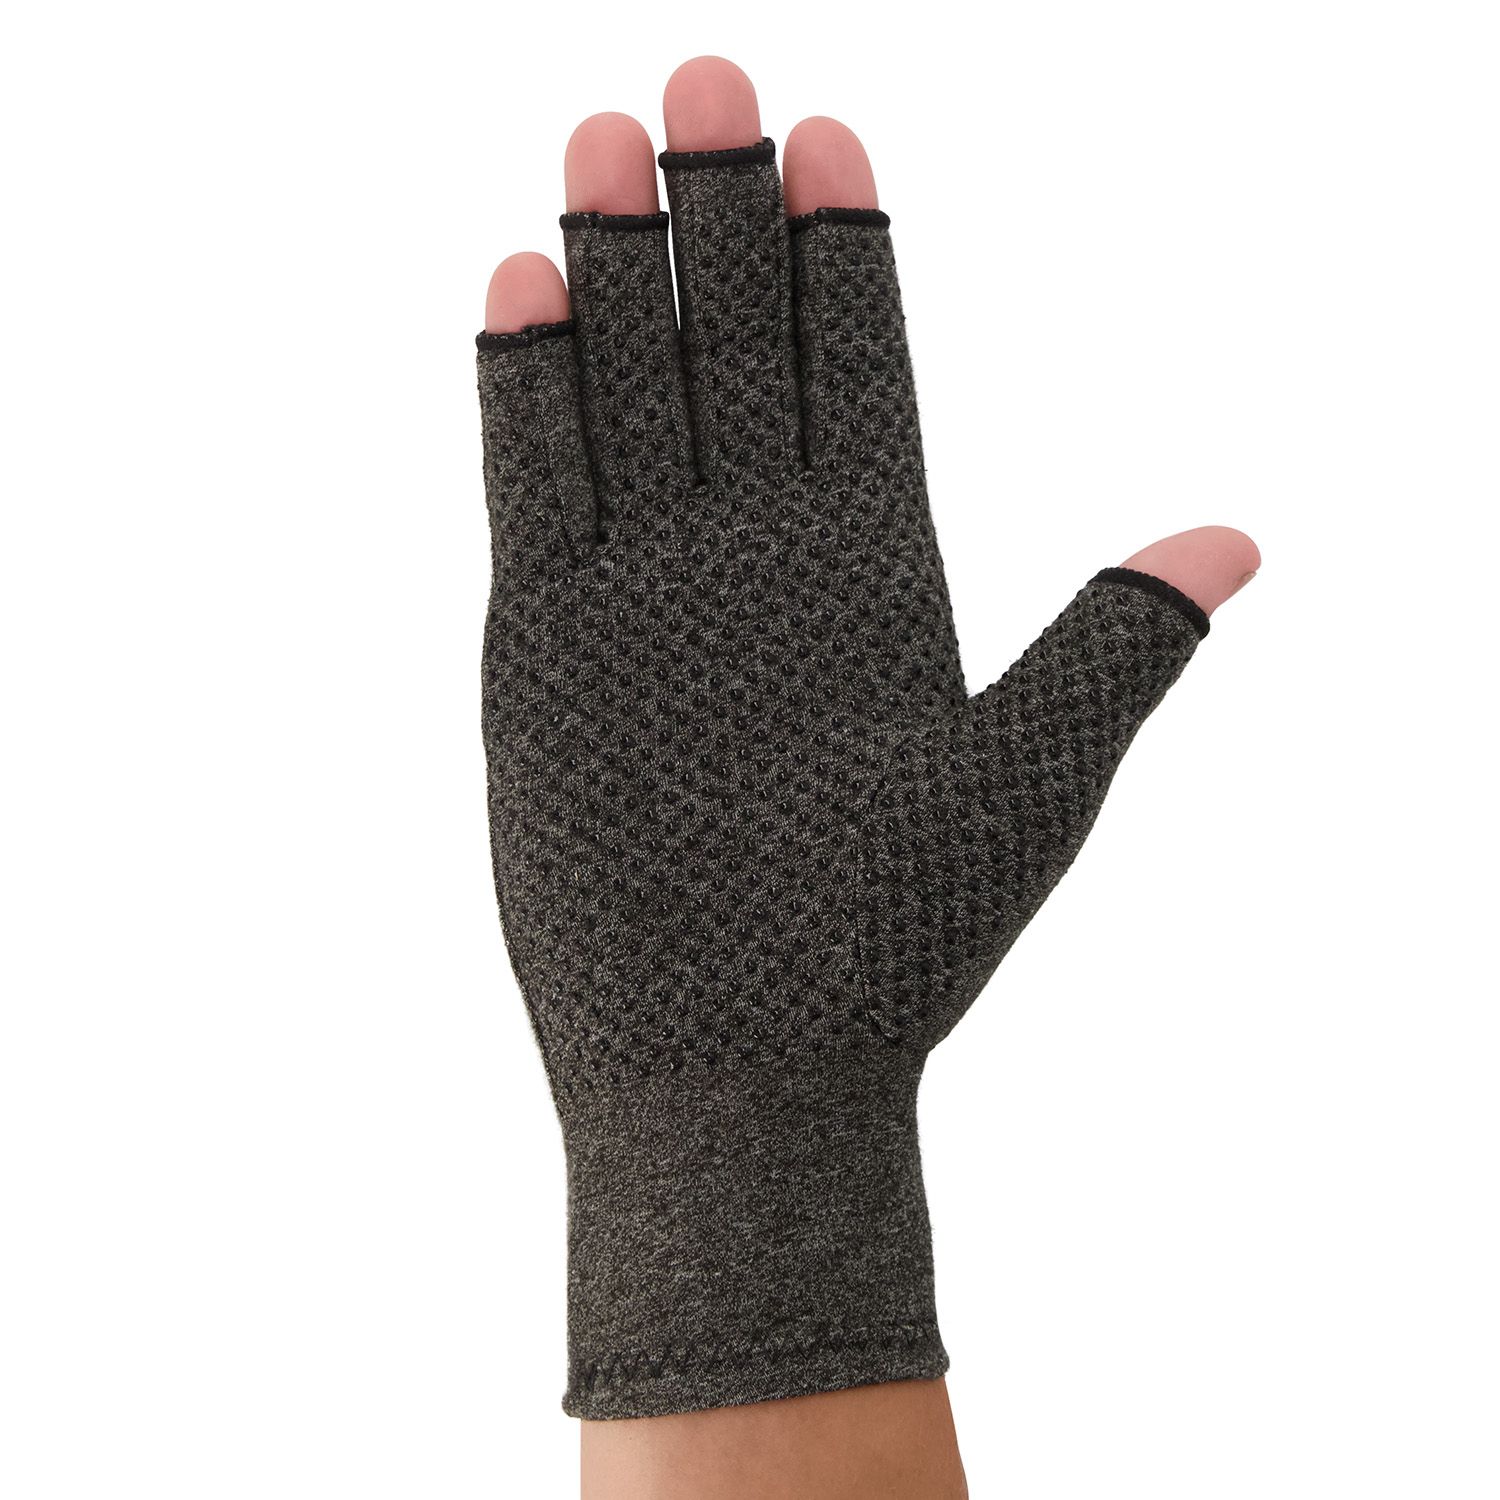 dunimed rheumatoid arthritis osteoarthritis gloves with anti-slip layer in skin worn on both hands